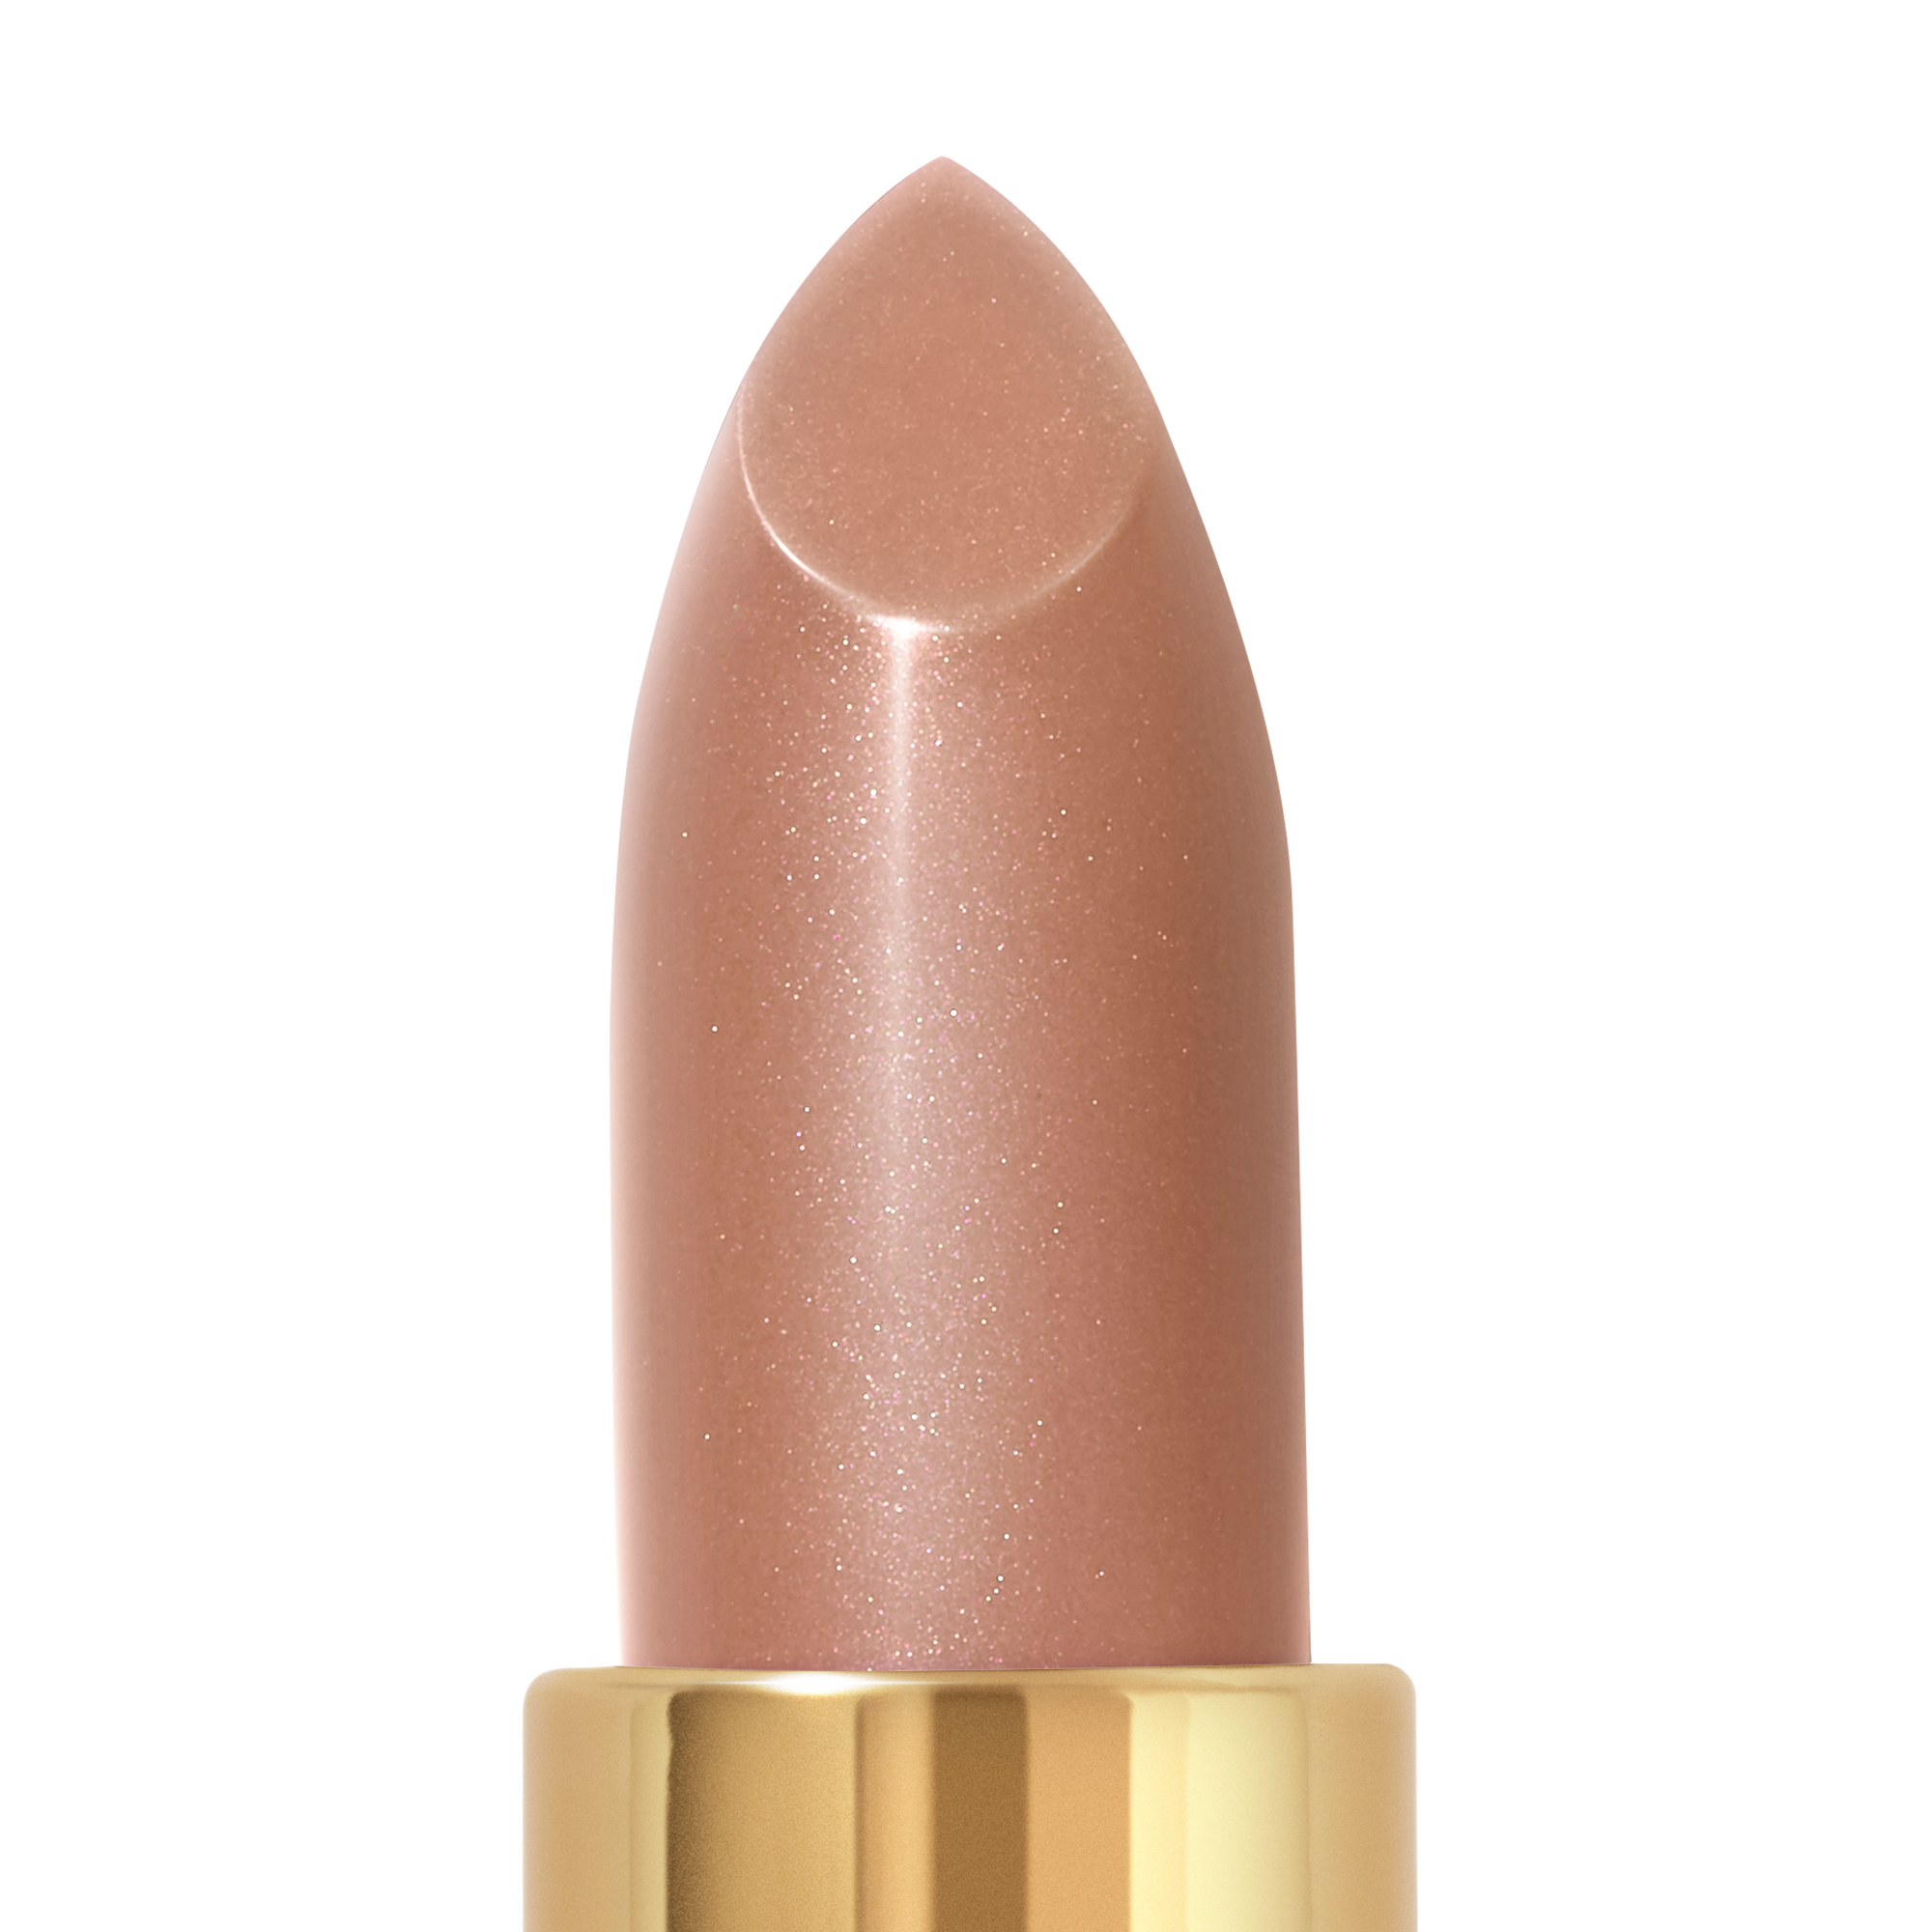 Revlon Super Lustrous Lipstick, Nude Attitude - image 7 of 7